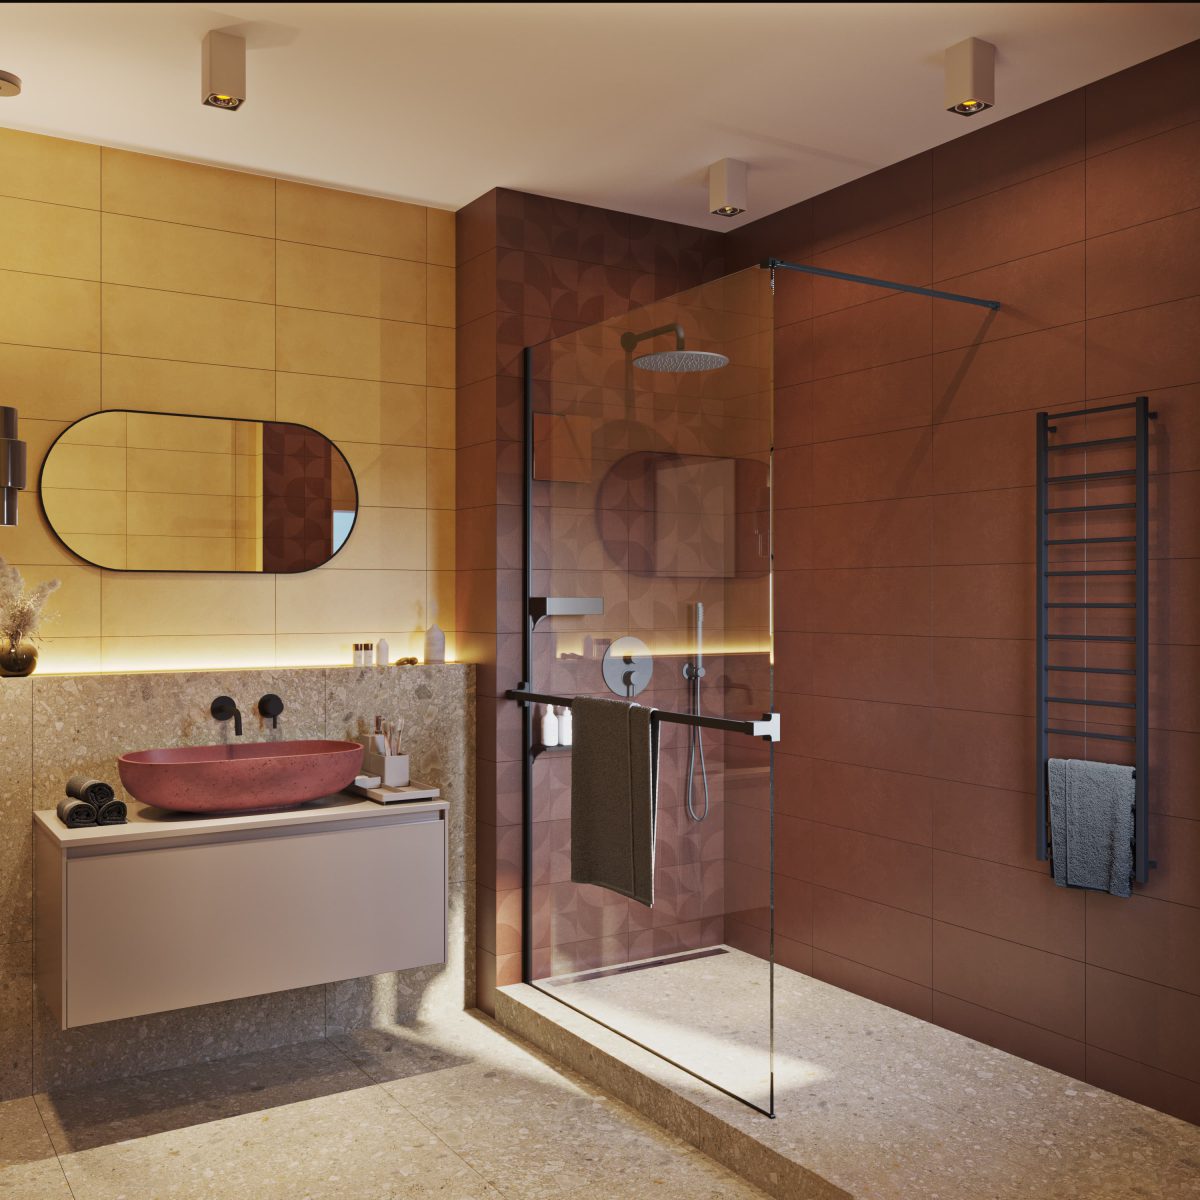 SIKO Barevná koupelna, hořčicově žlutý obklad, červený obklad, hrubé terrazzo, kamenná dlažba, sprchový kout walk-in, topný žebřík